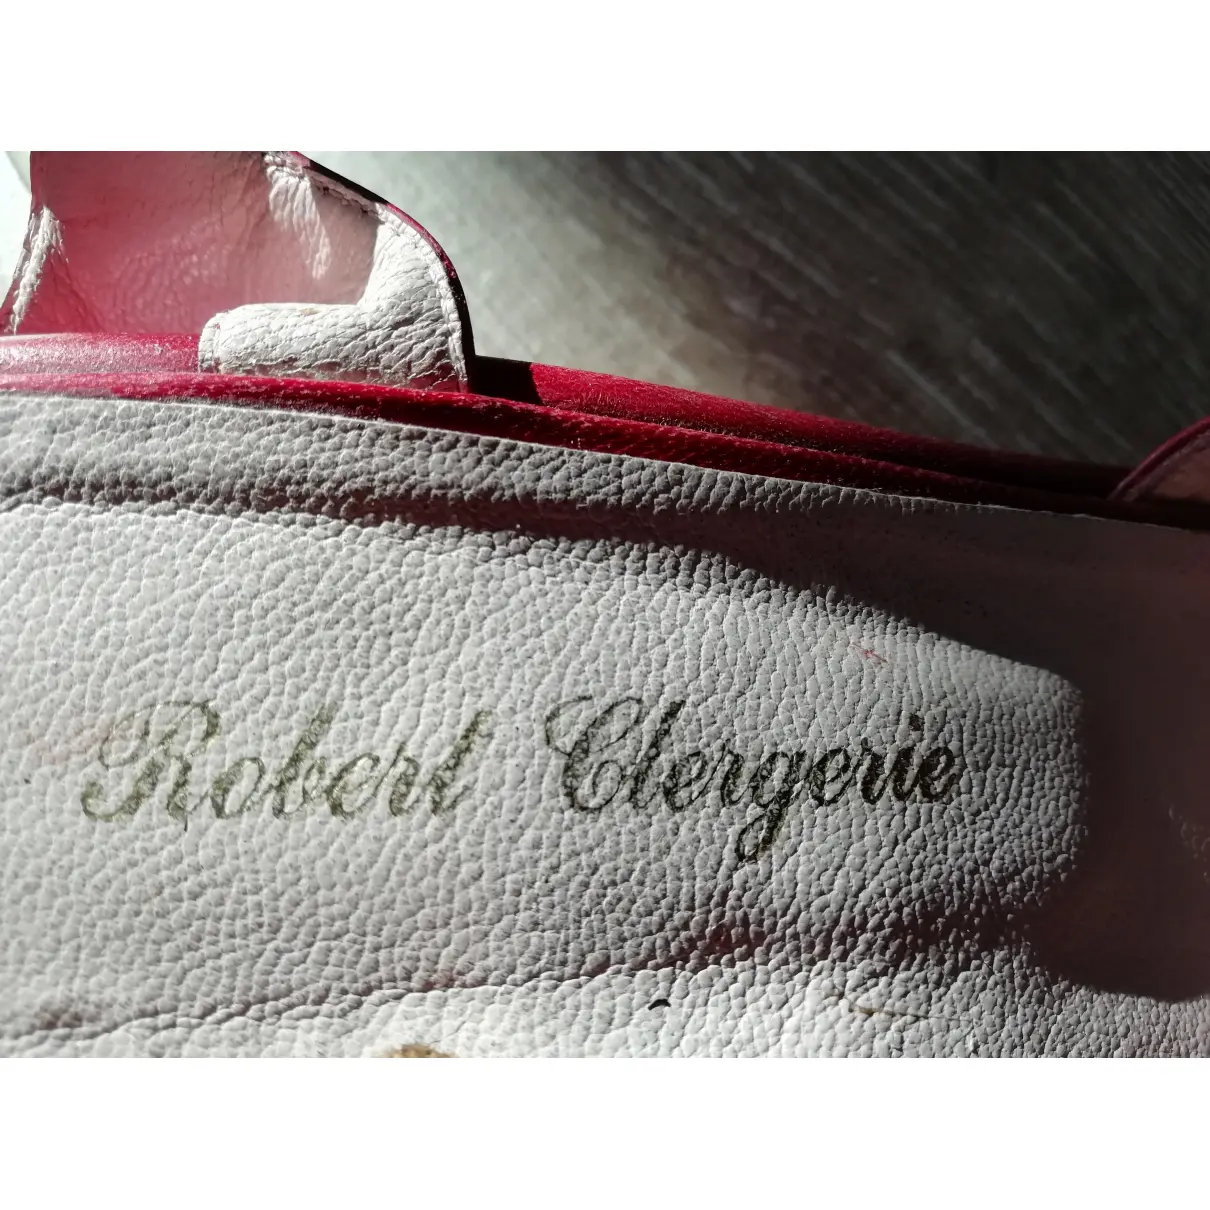 Leather sandals Robert Clergerie - Vintage